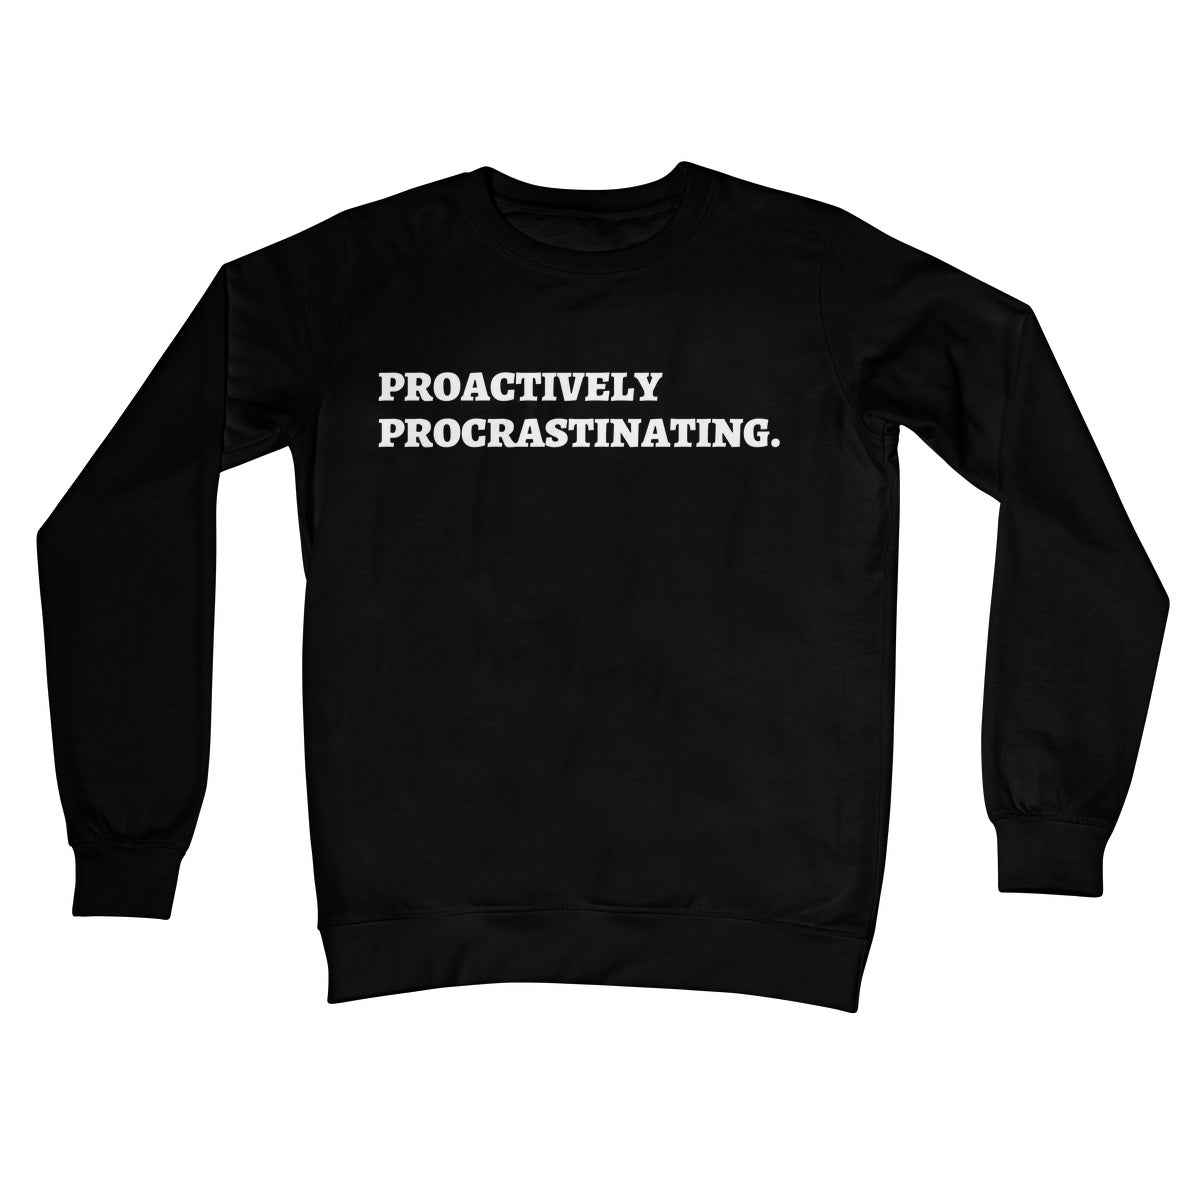 proactively procrastinating jumper black